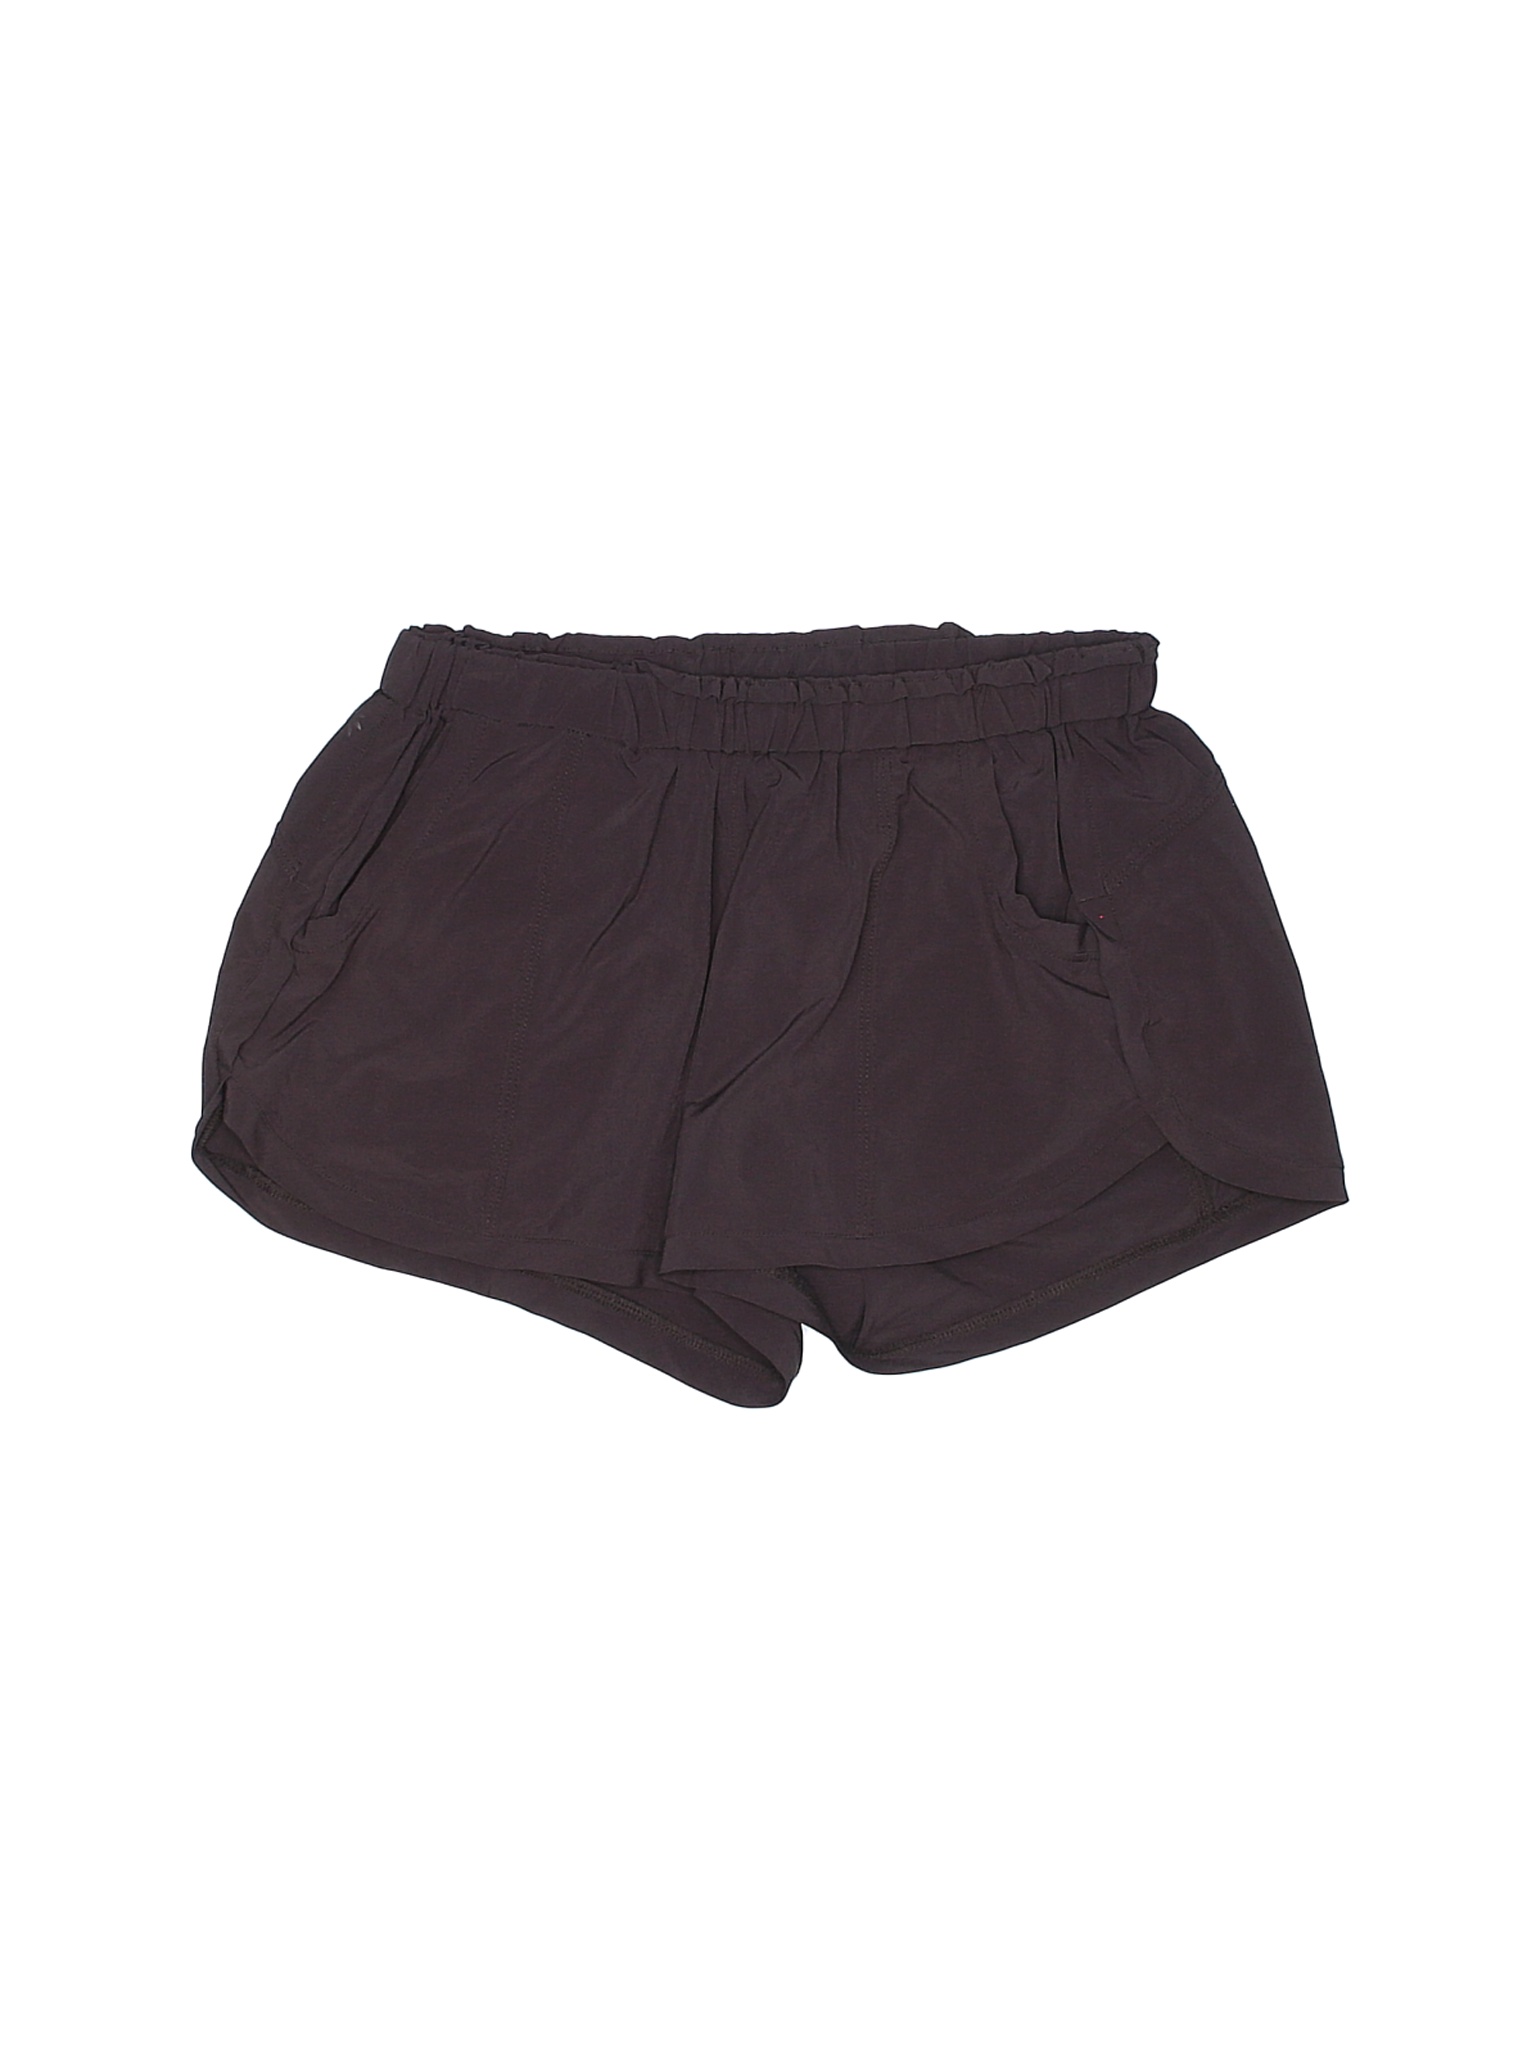 Athleta Women Brown Athletic Shorts S | eBay